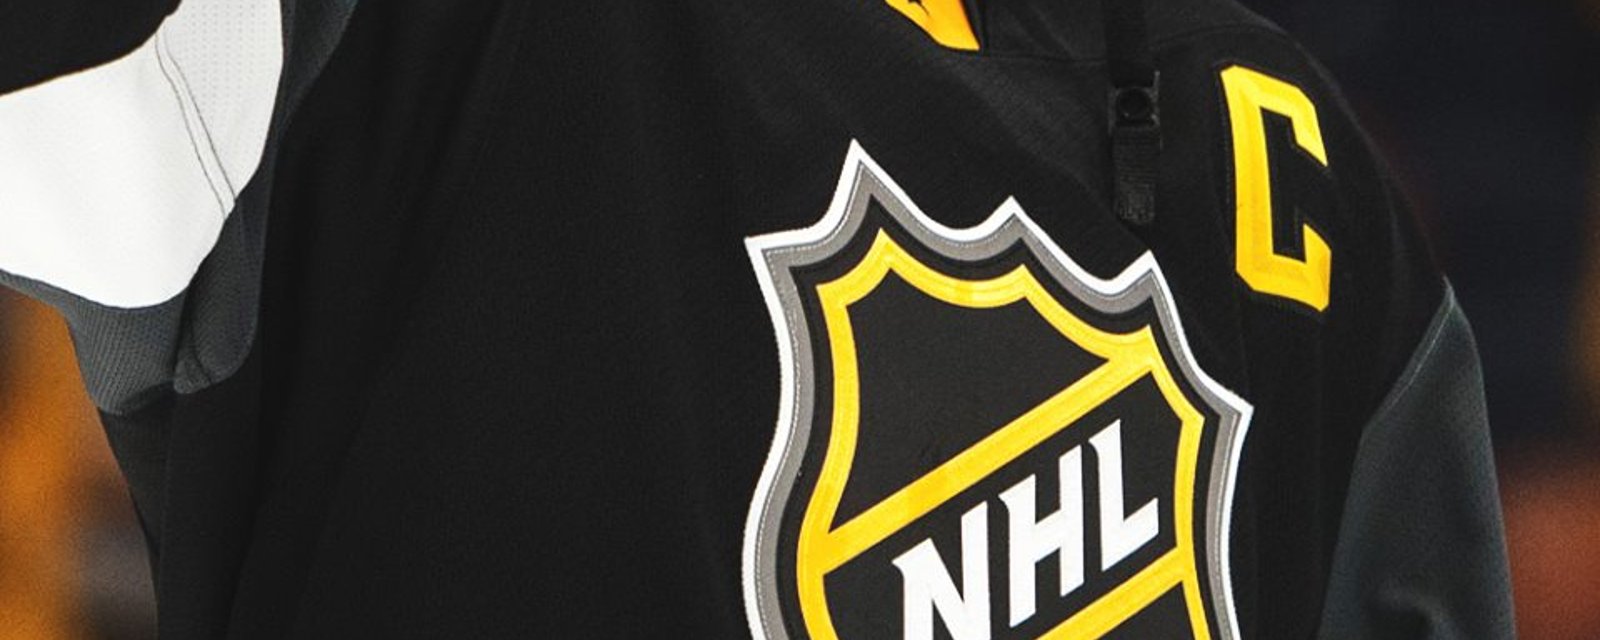 Breaking: NHL captain makes shocking comments after brutal loss